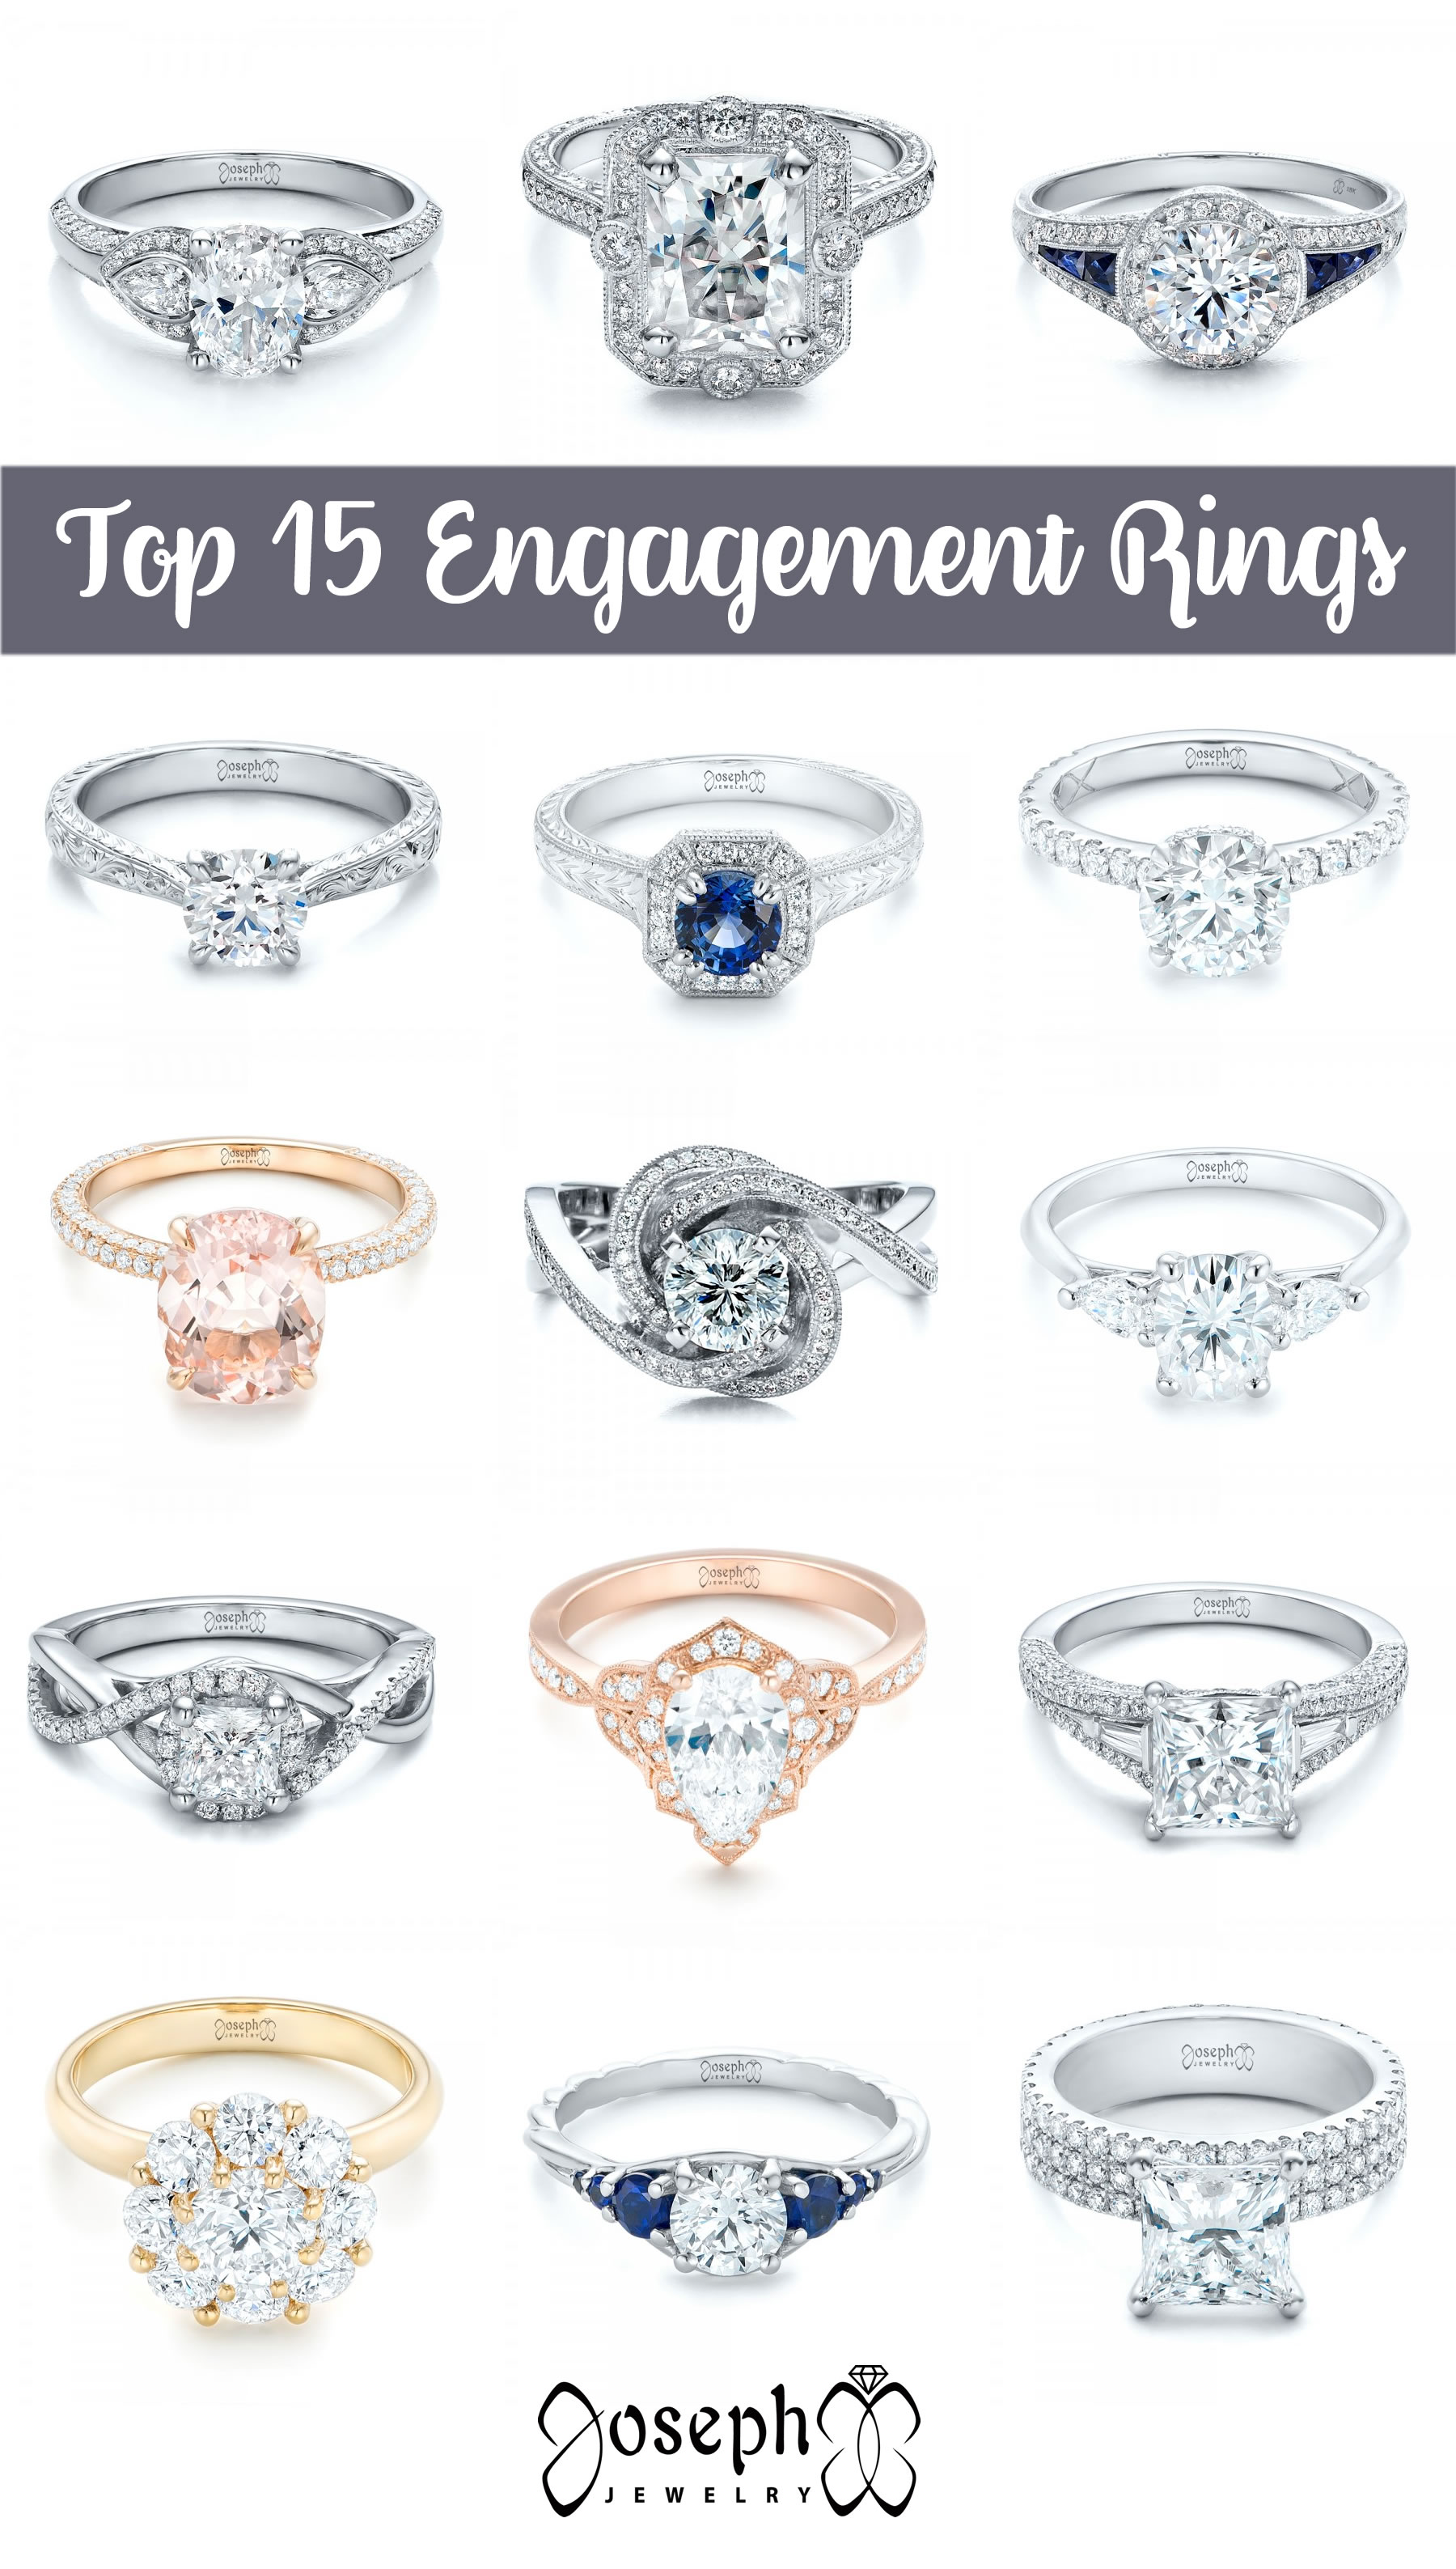 Joseph Jewelry Top 15 Engagement Rings